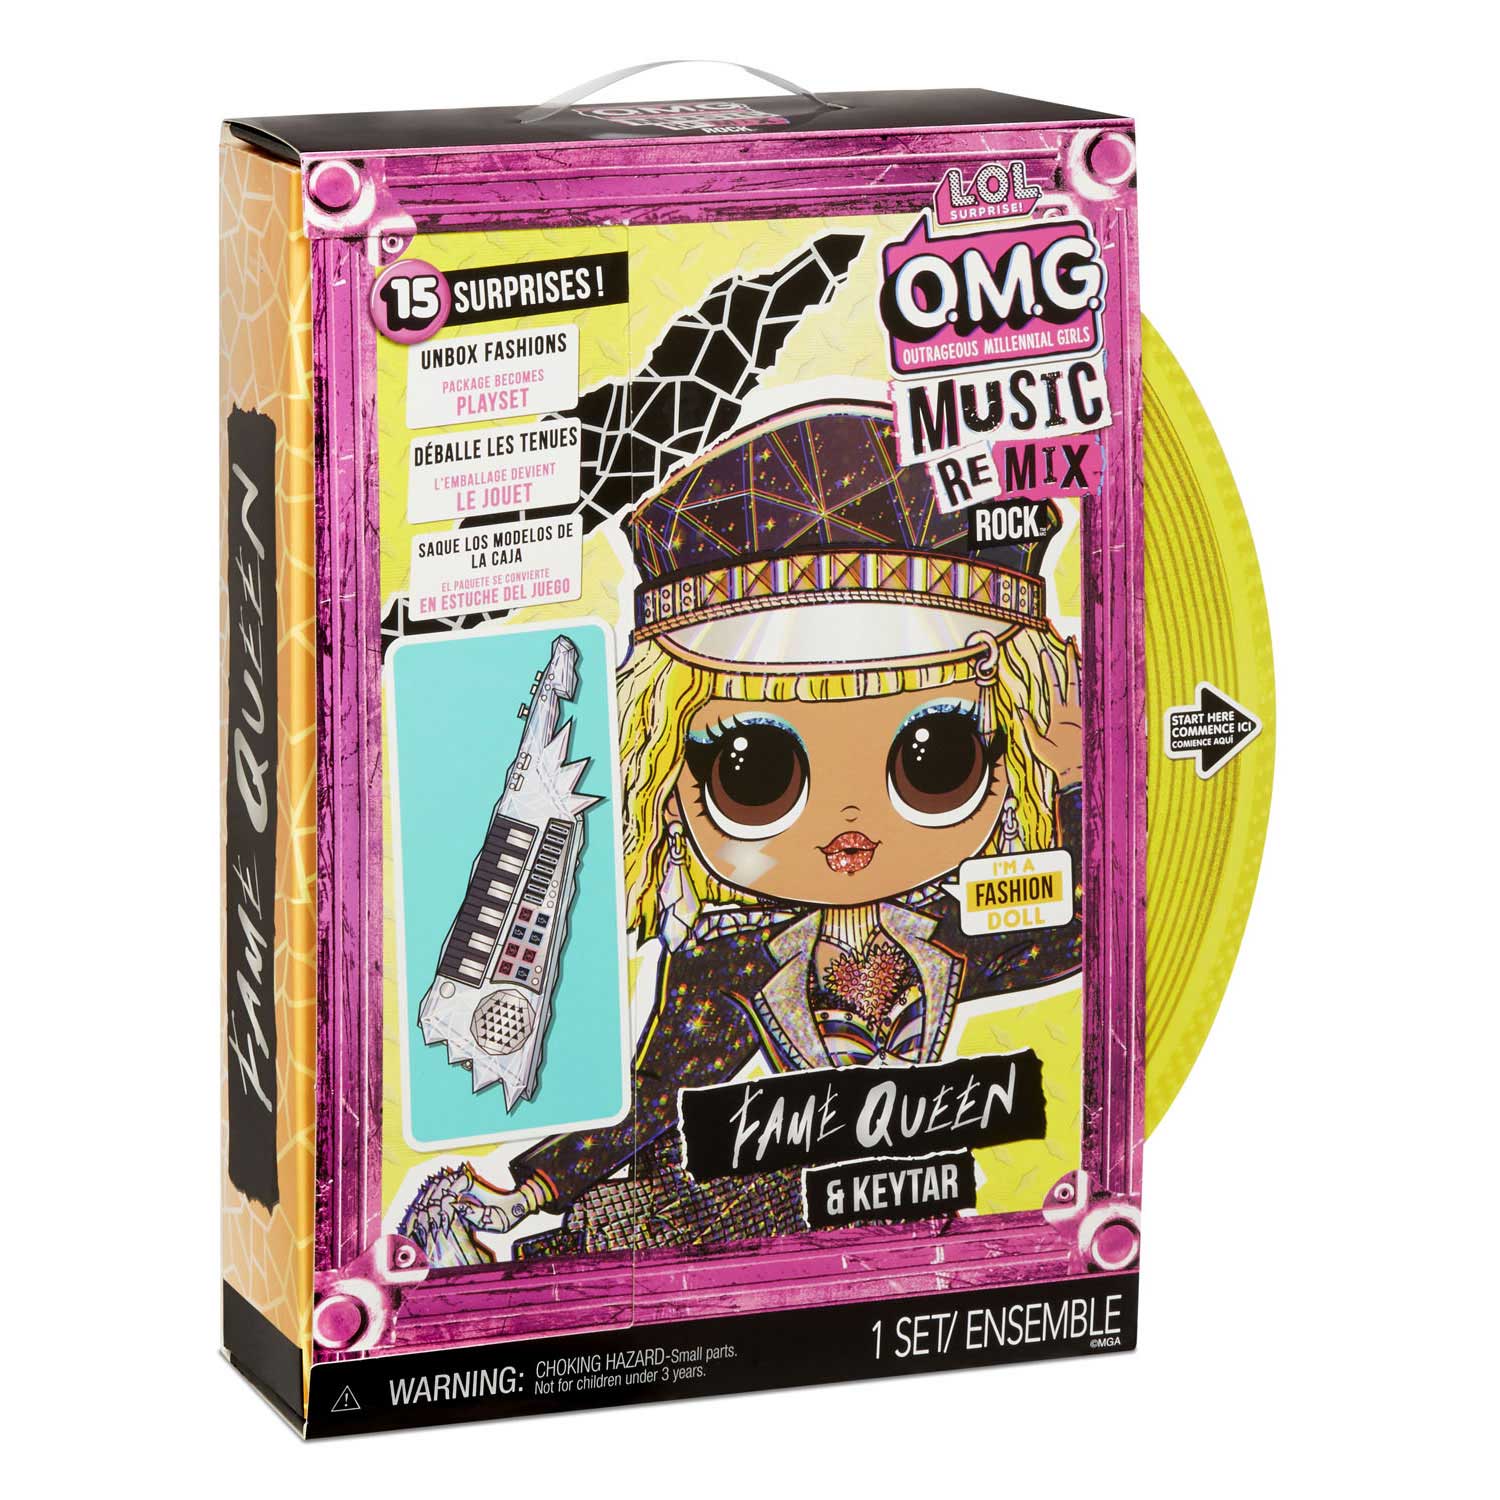 L.O.L. Surprise OMG Pop Remix Rock-  Fame Queen and Keytar